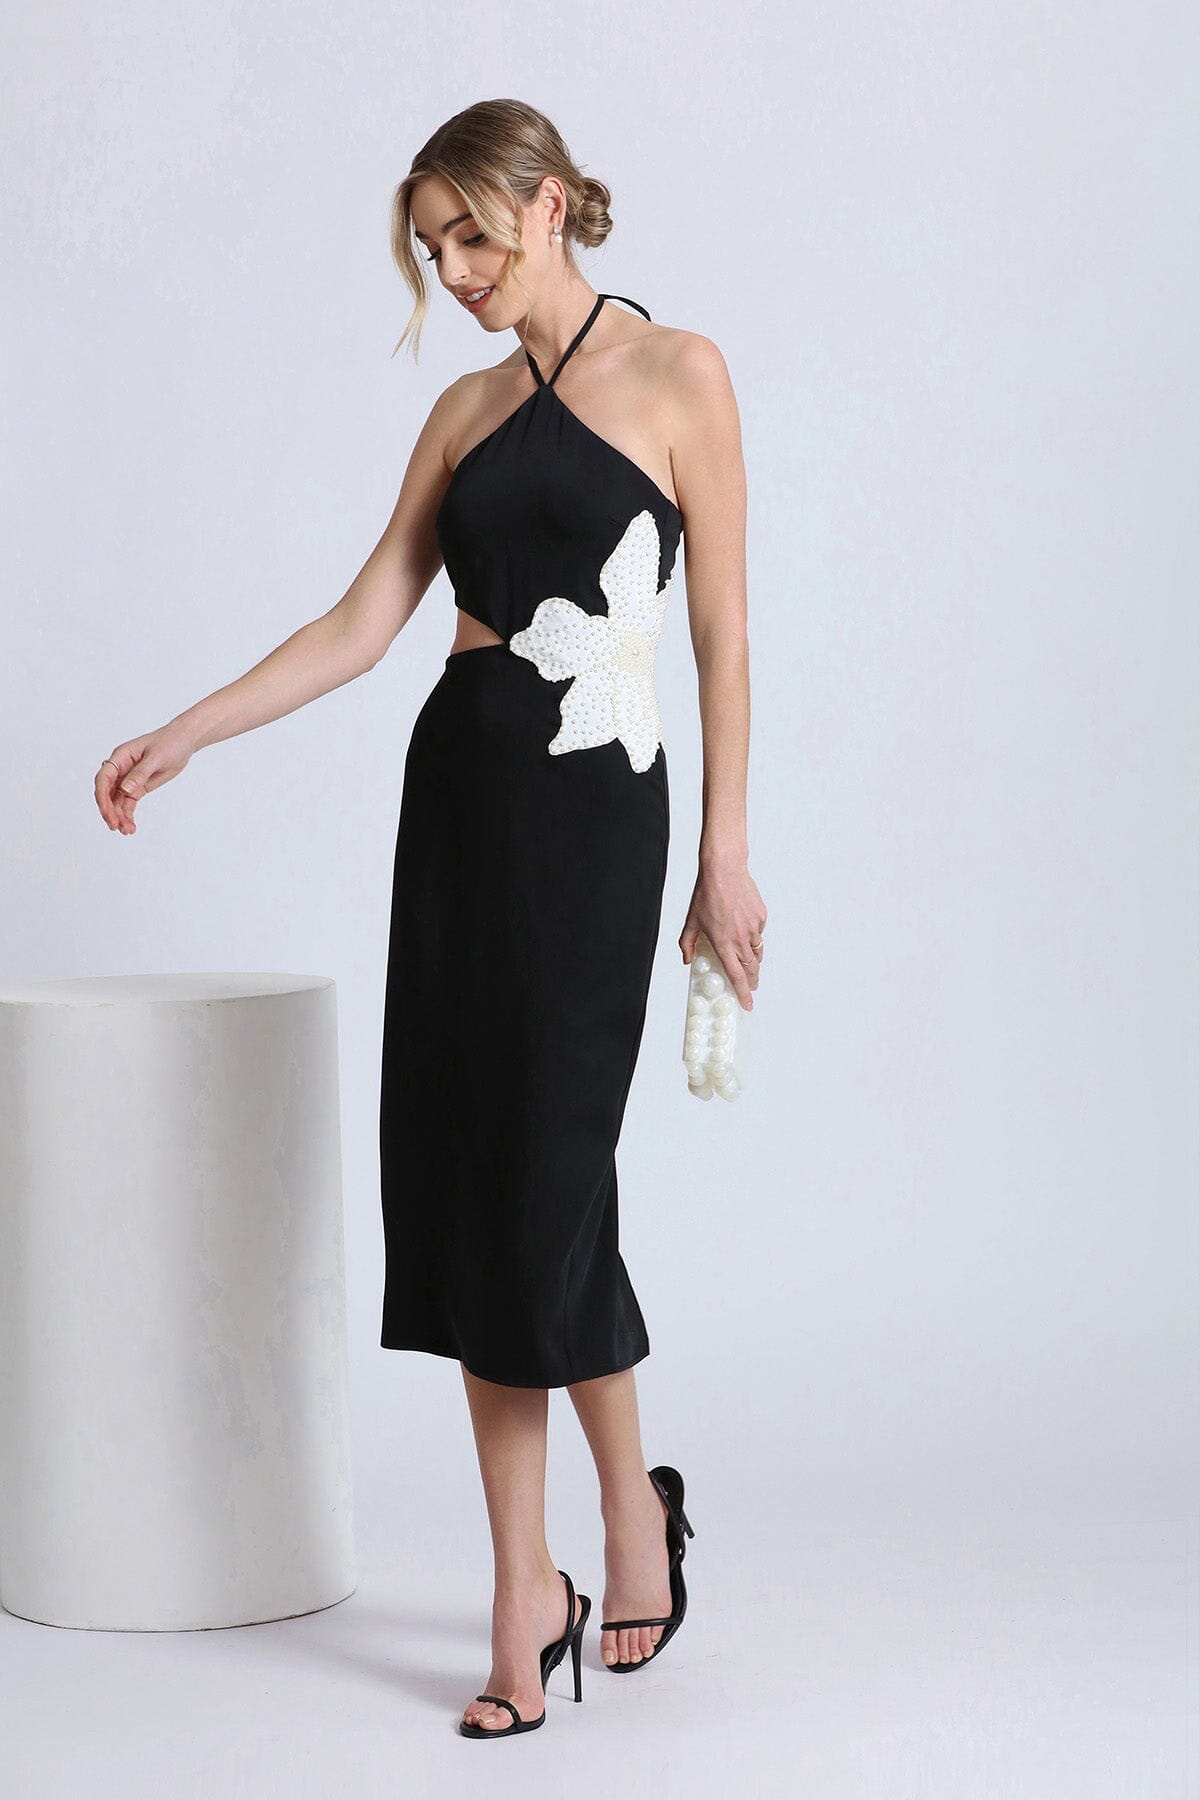 white flower embellished cut-out black halter dress - women's figure flattering summer wedding guest dresses for 2024 fashion trends by Avec Les Filles